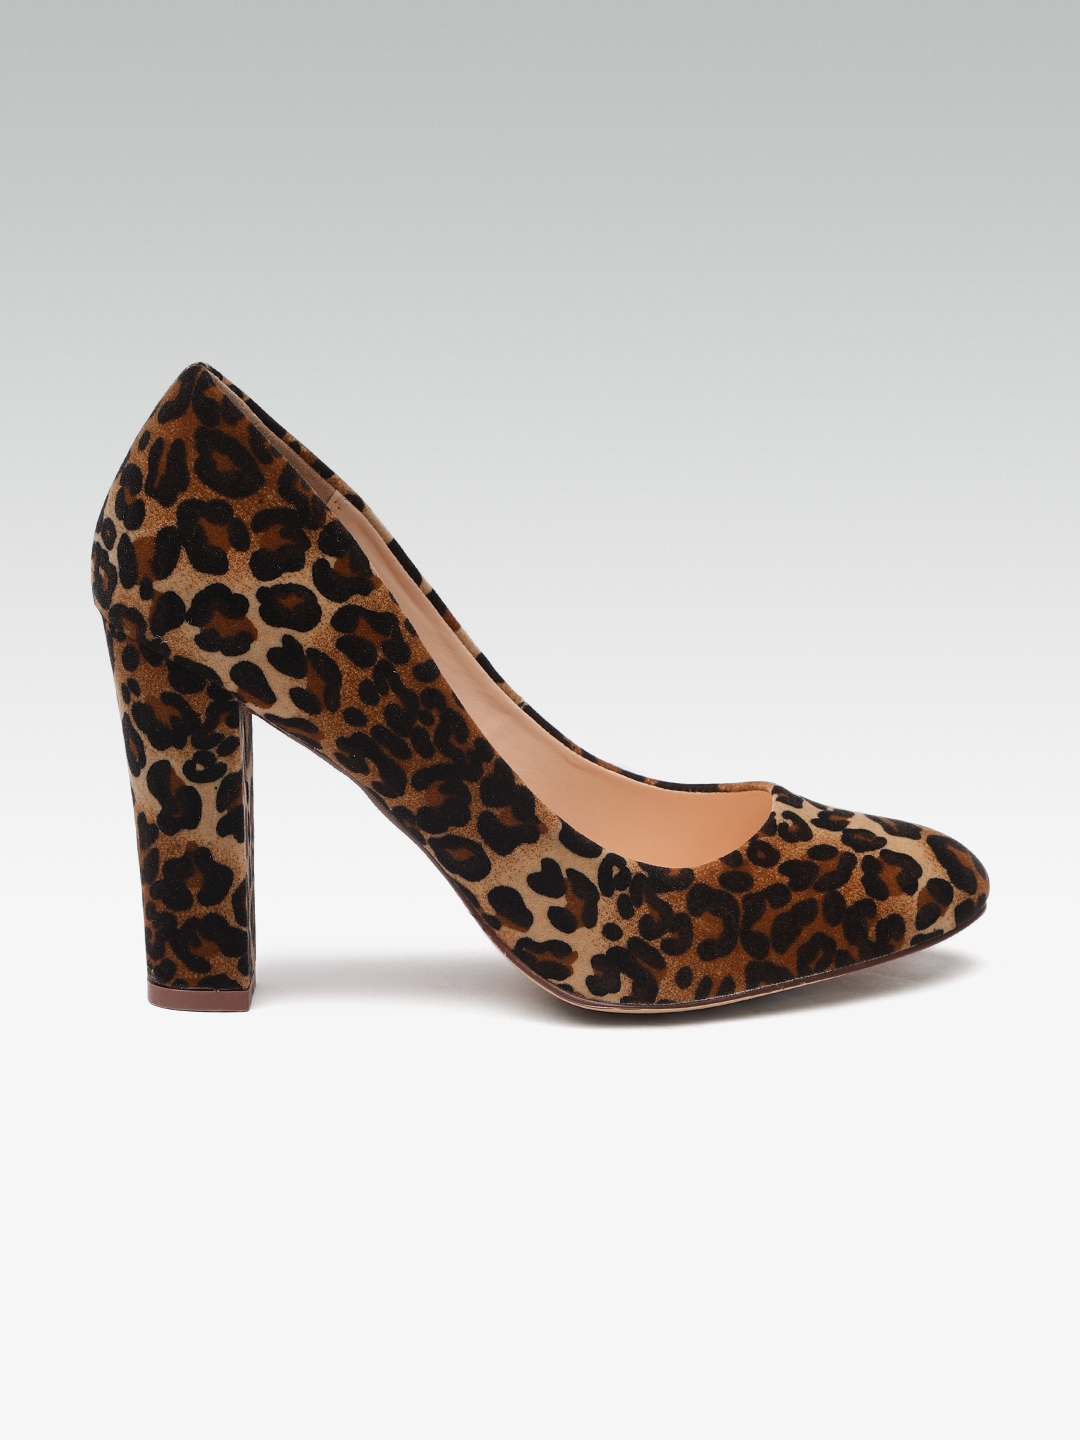 Brigitte Nielsen wearing leopard print high heel shoes Stock Photo - Alamy-thanhphatduhoc.com.vn